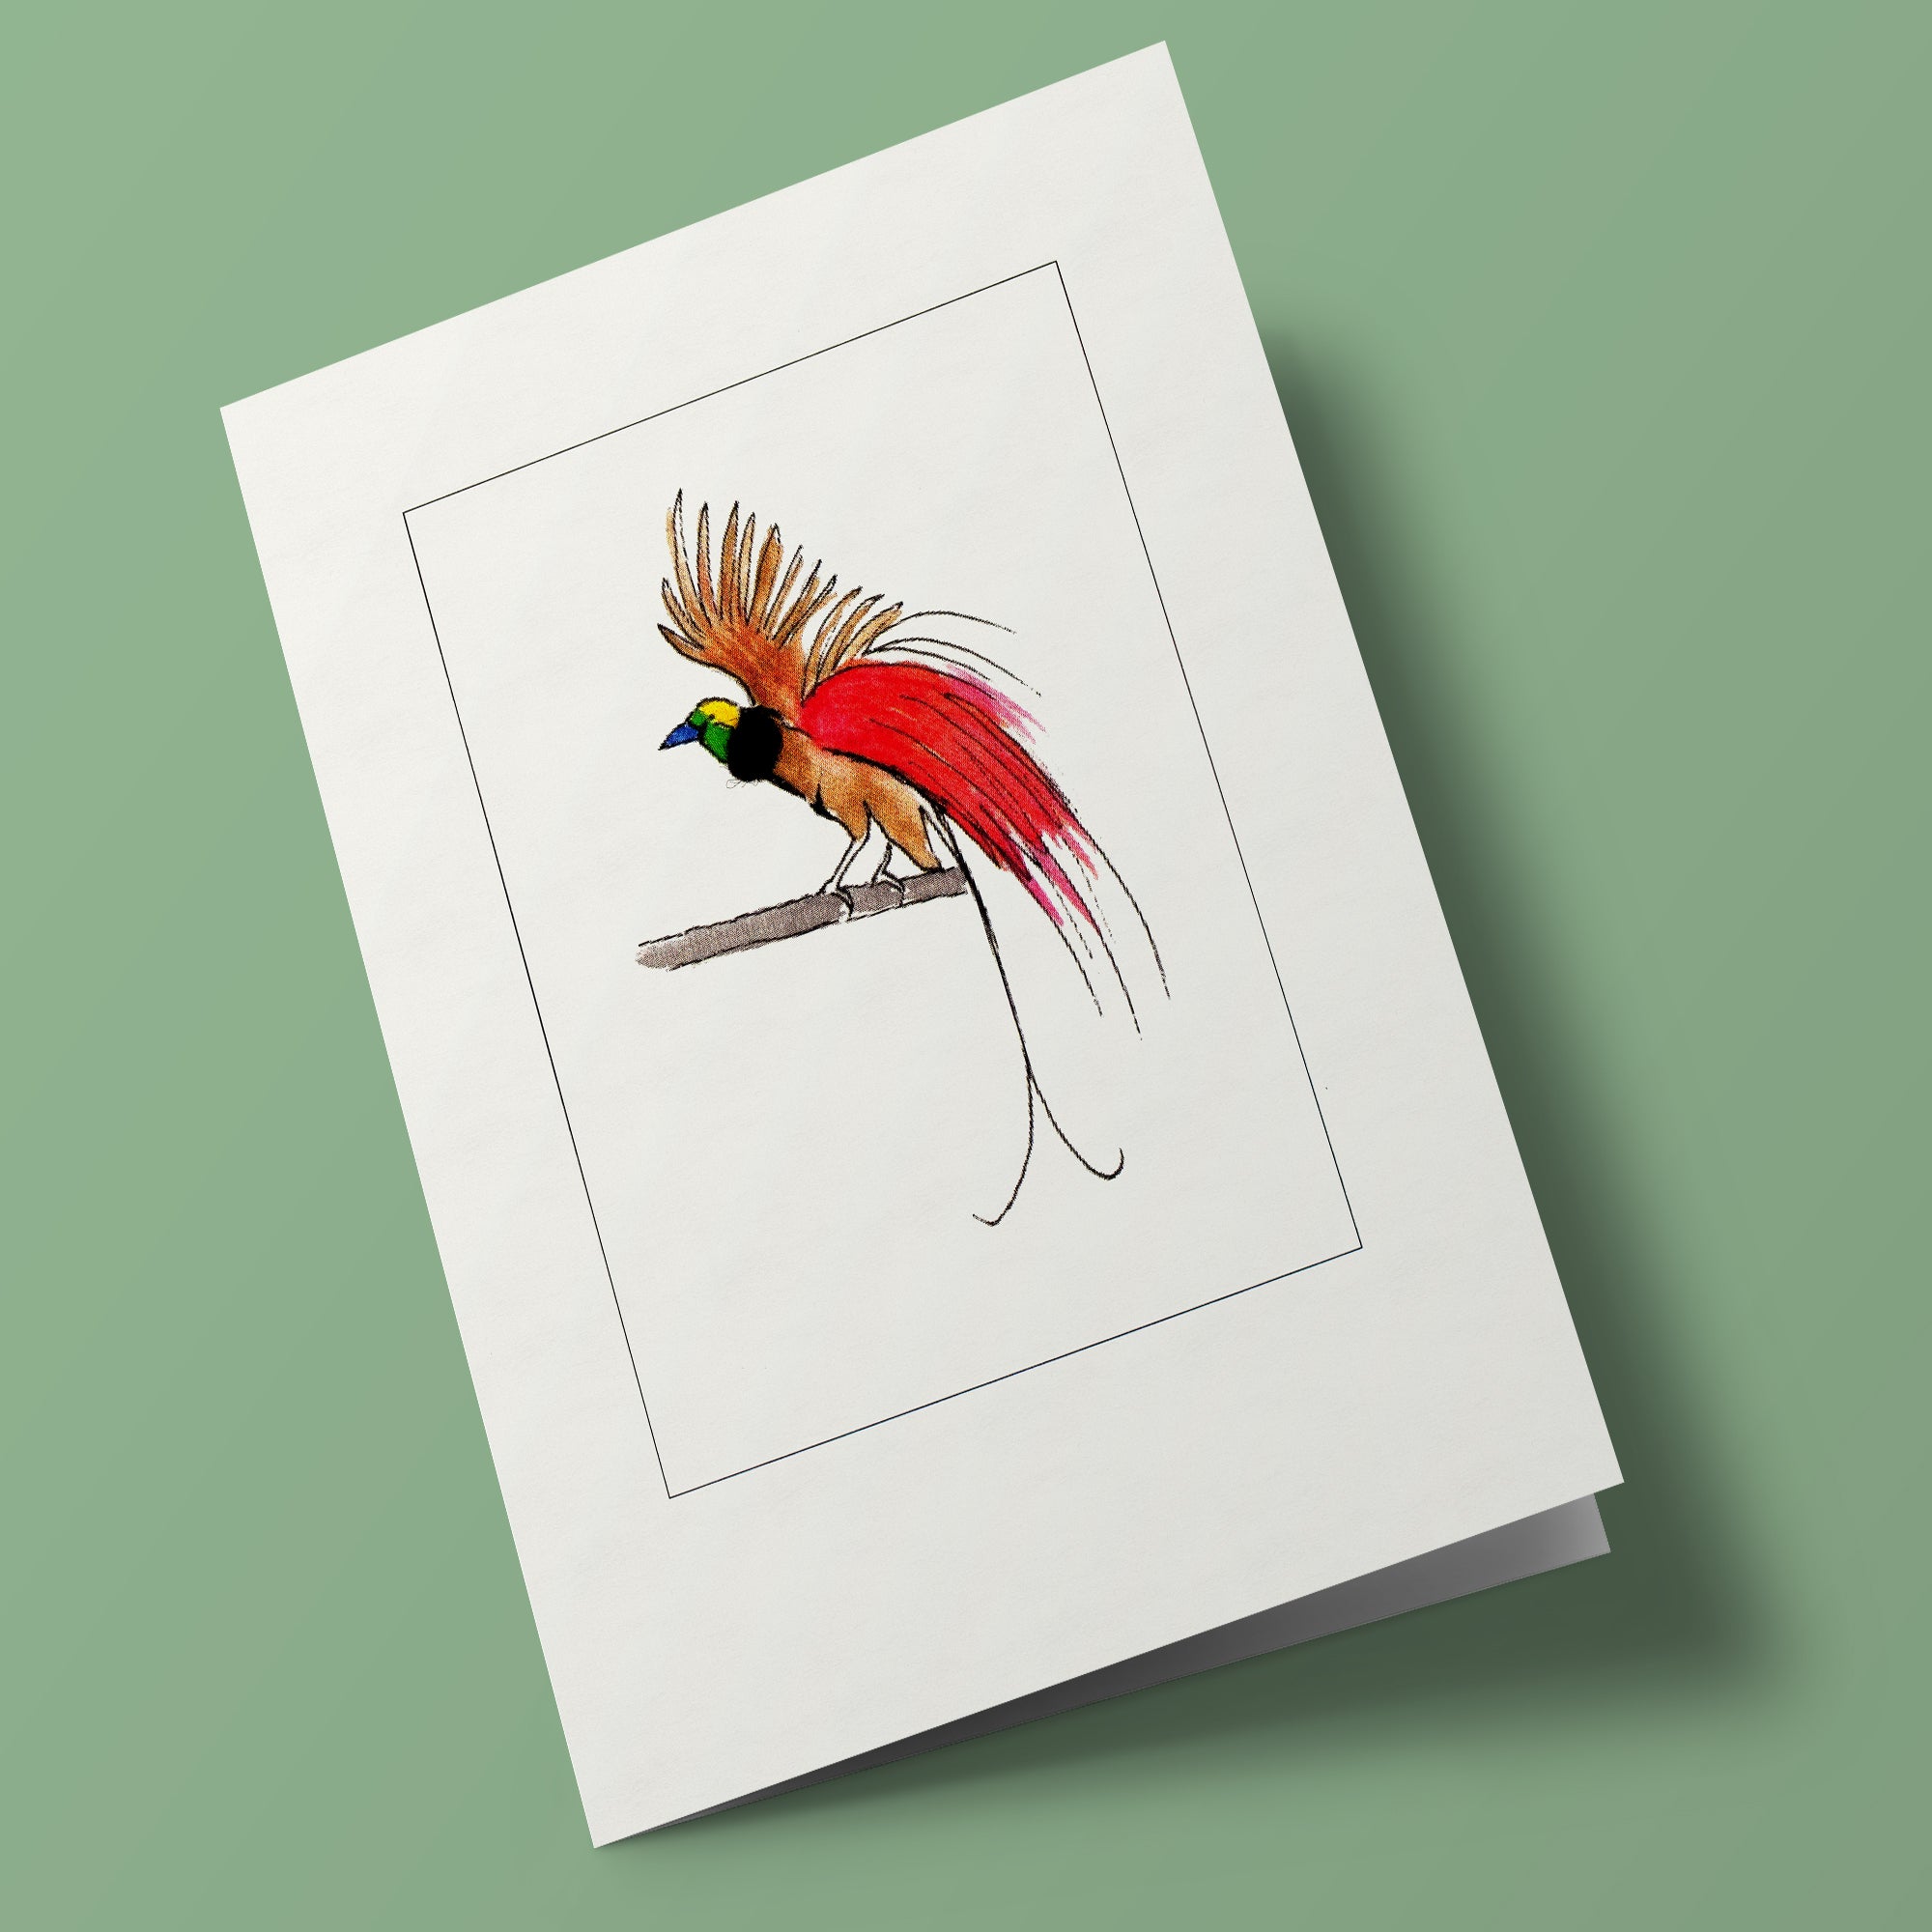 Papersheep - Paradisier de Raggi (oiseau)